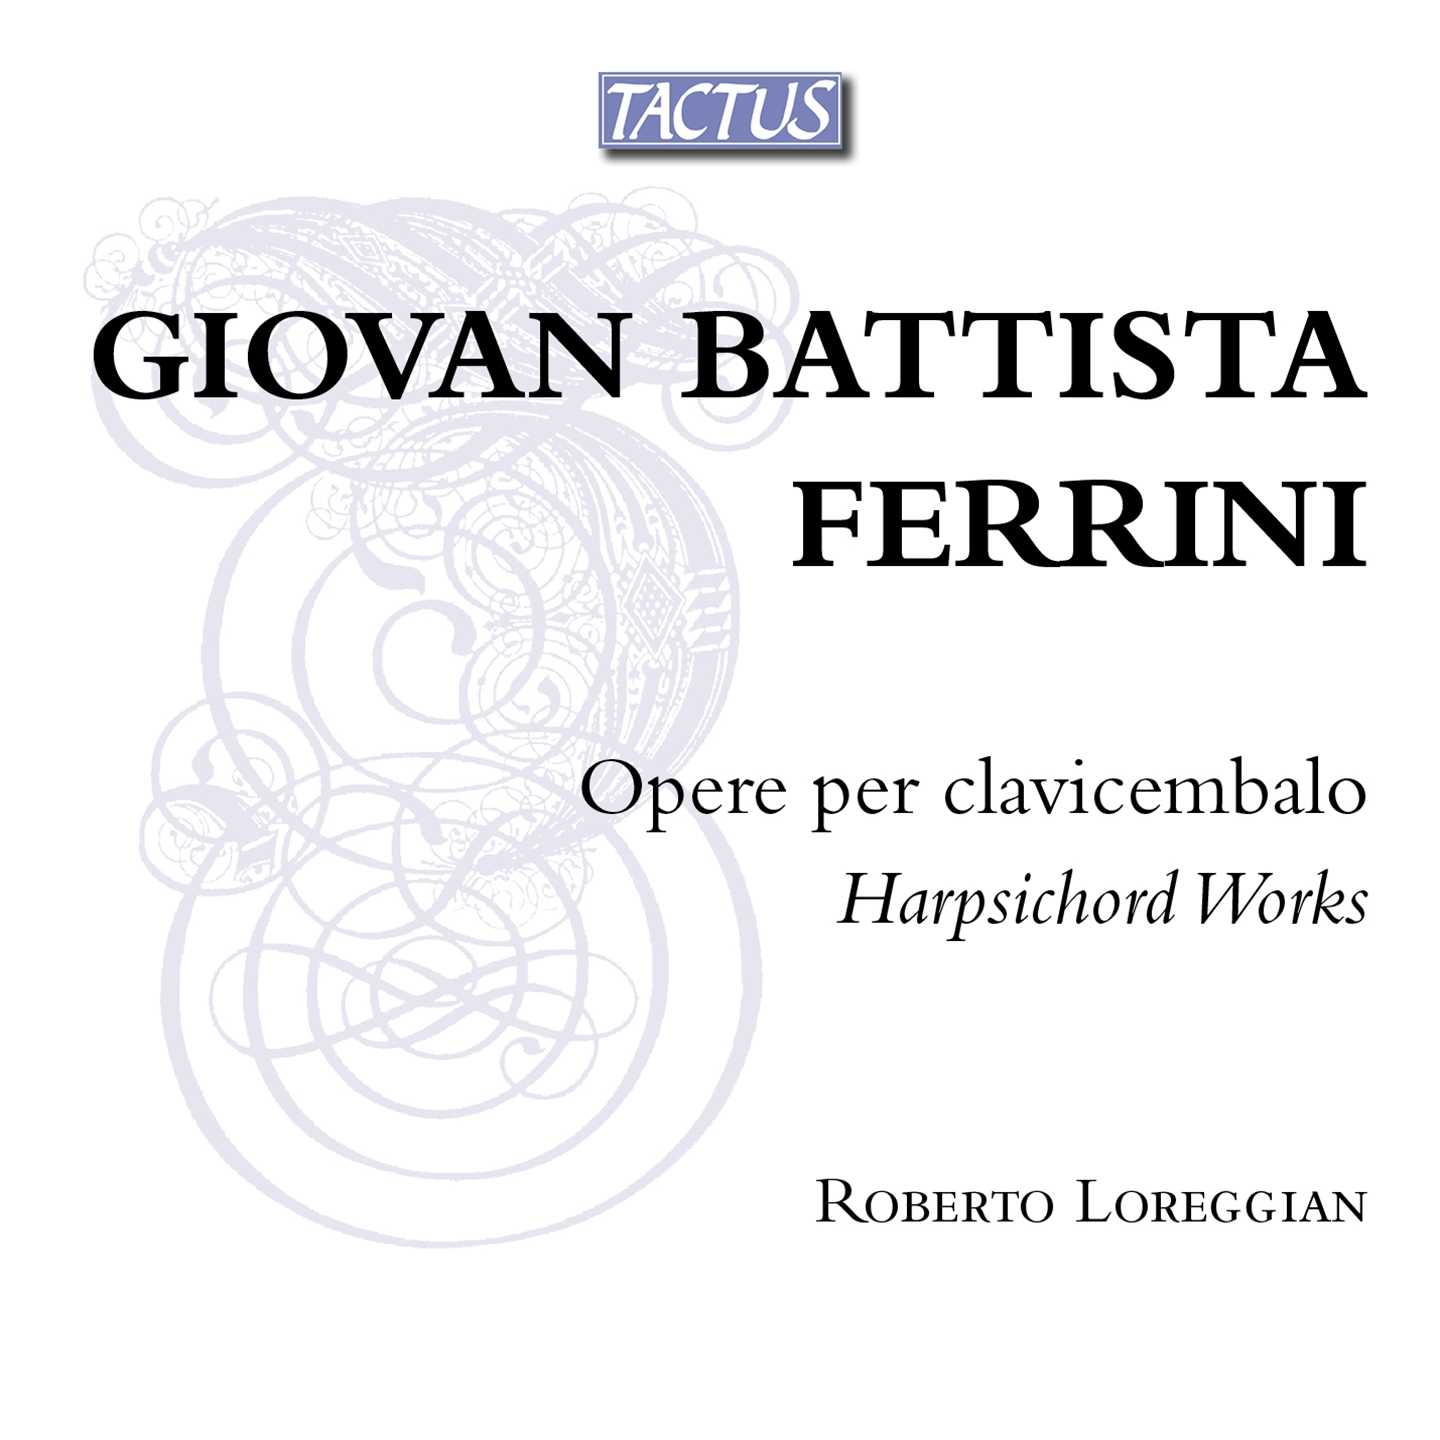 Roberto Loreggian - Ferrini: Harpsichord Works - Photo 1/1